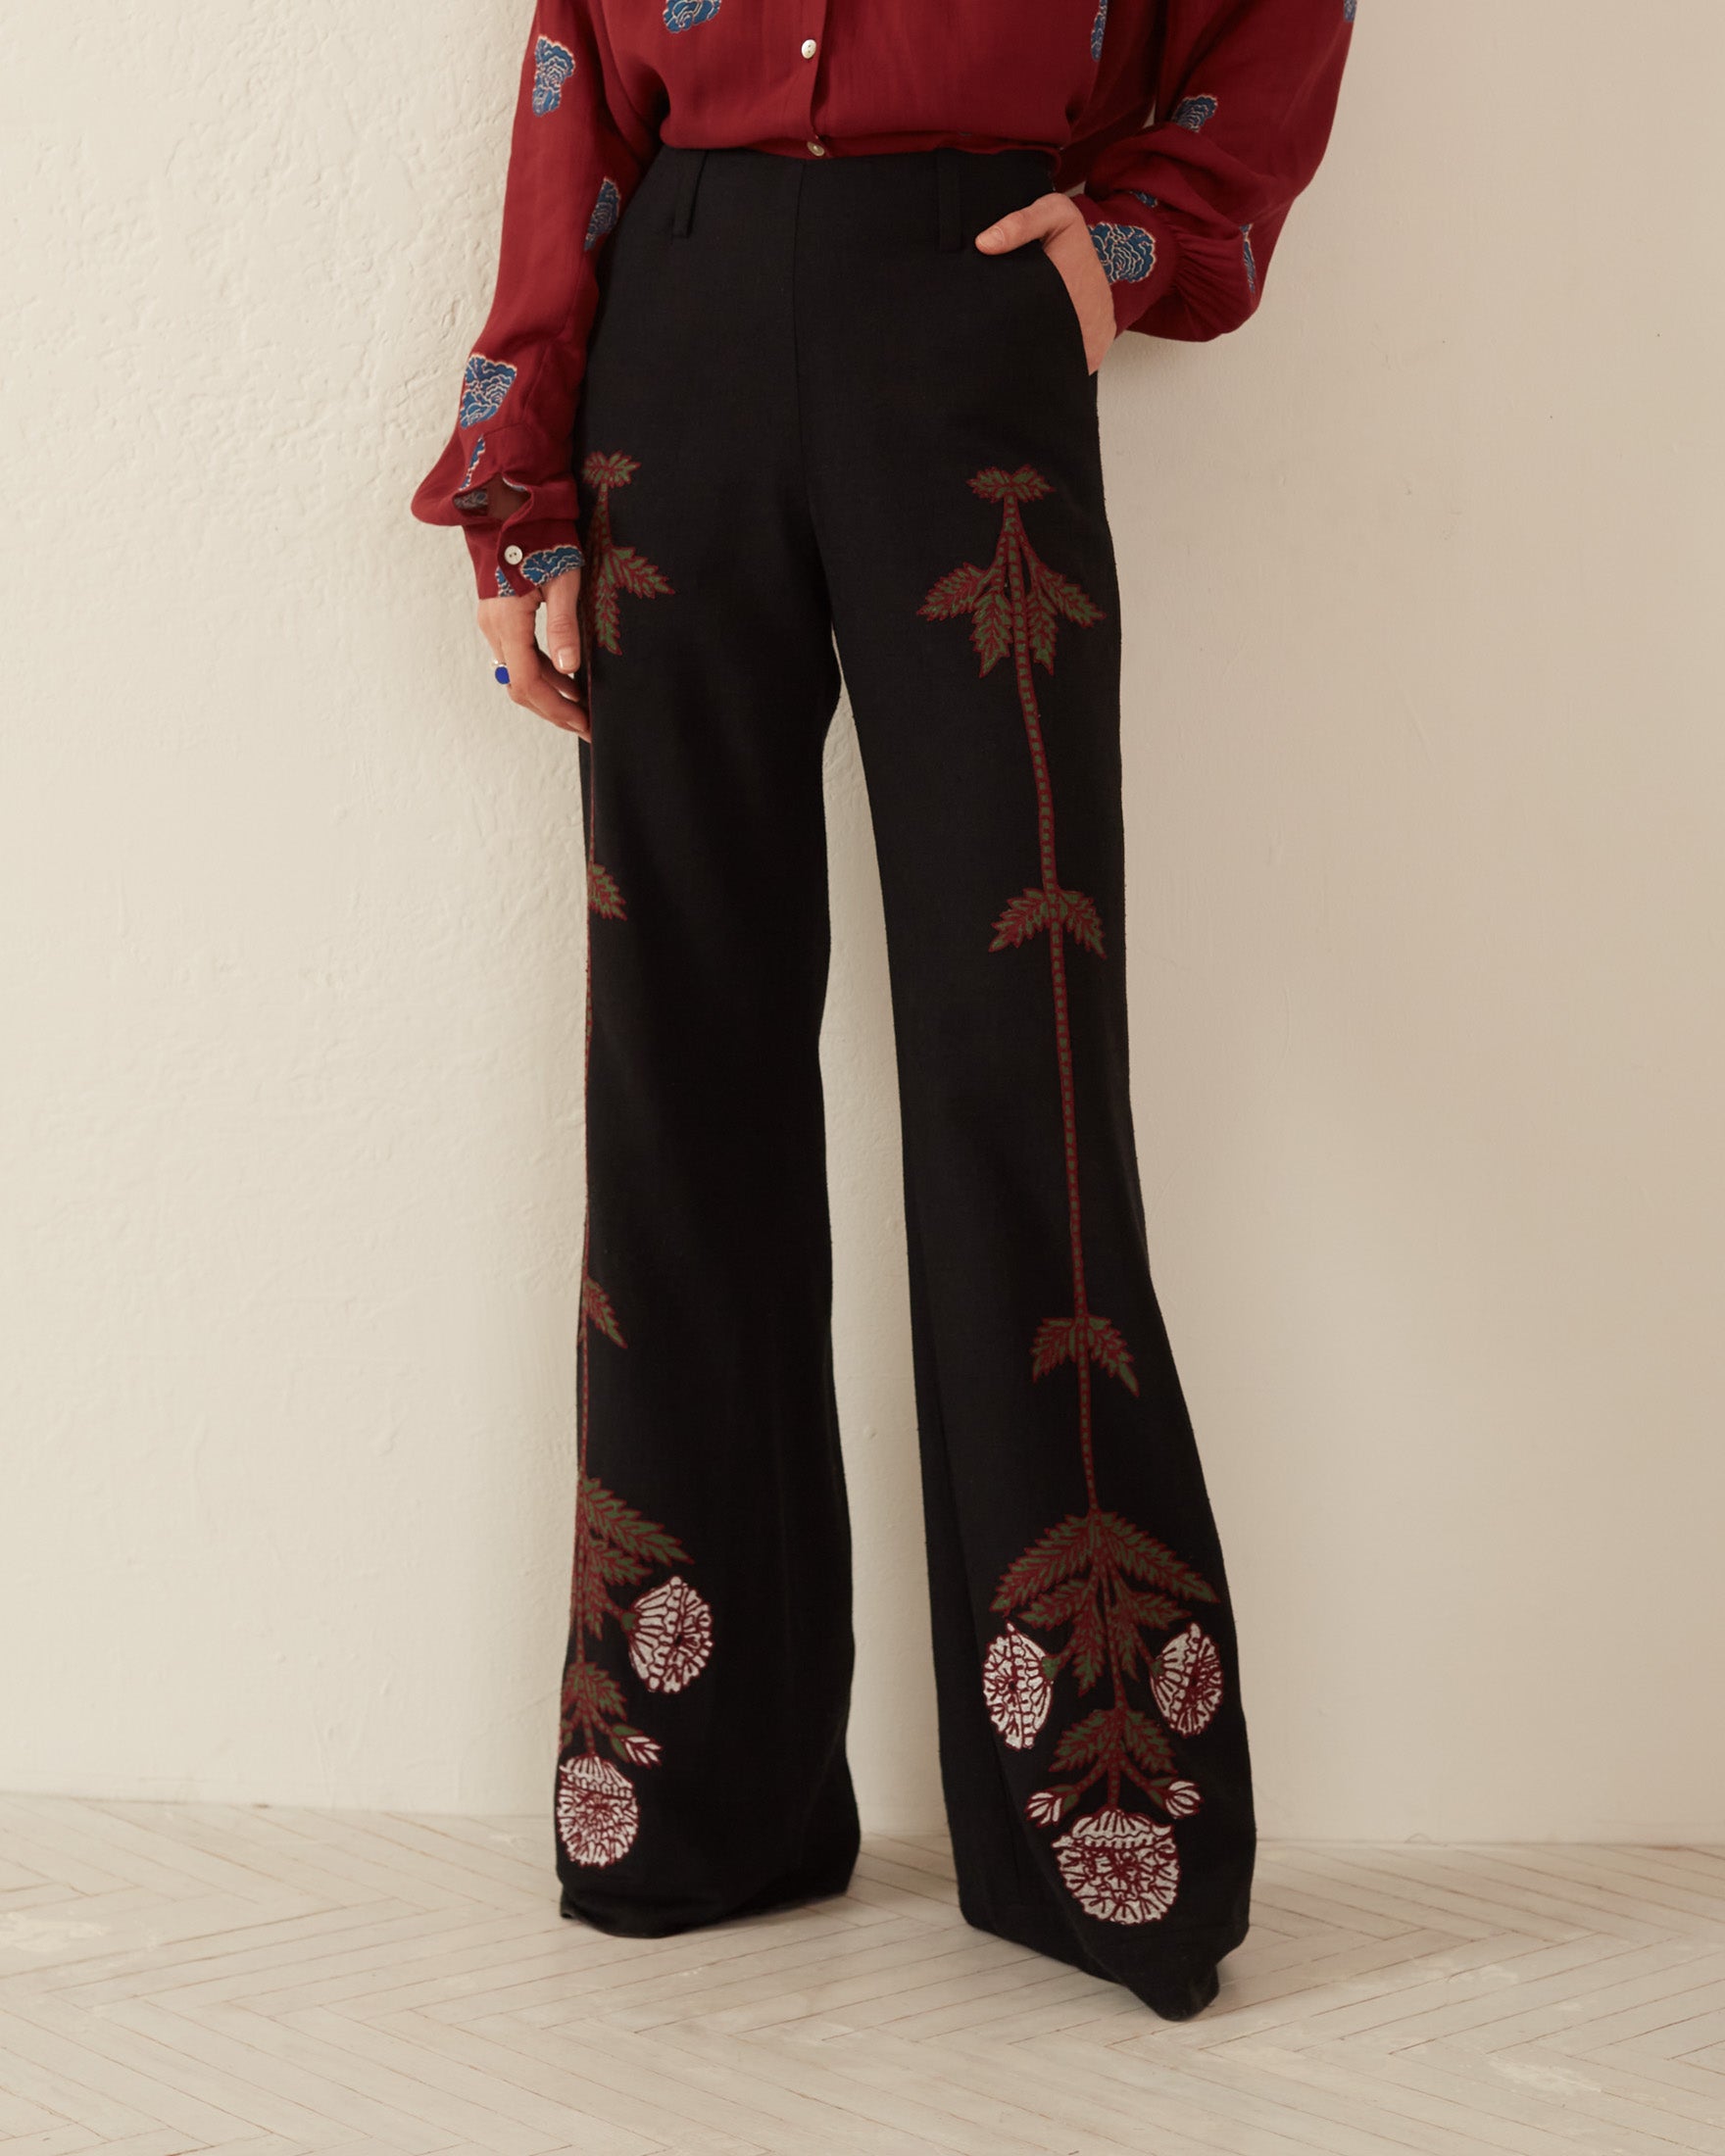 Black flower-embroidered sheer pants, AGATHE